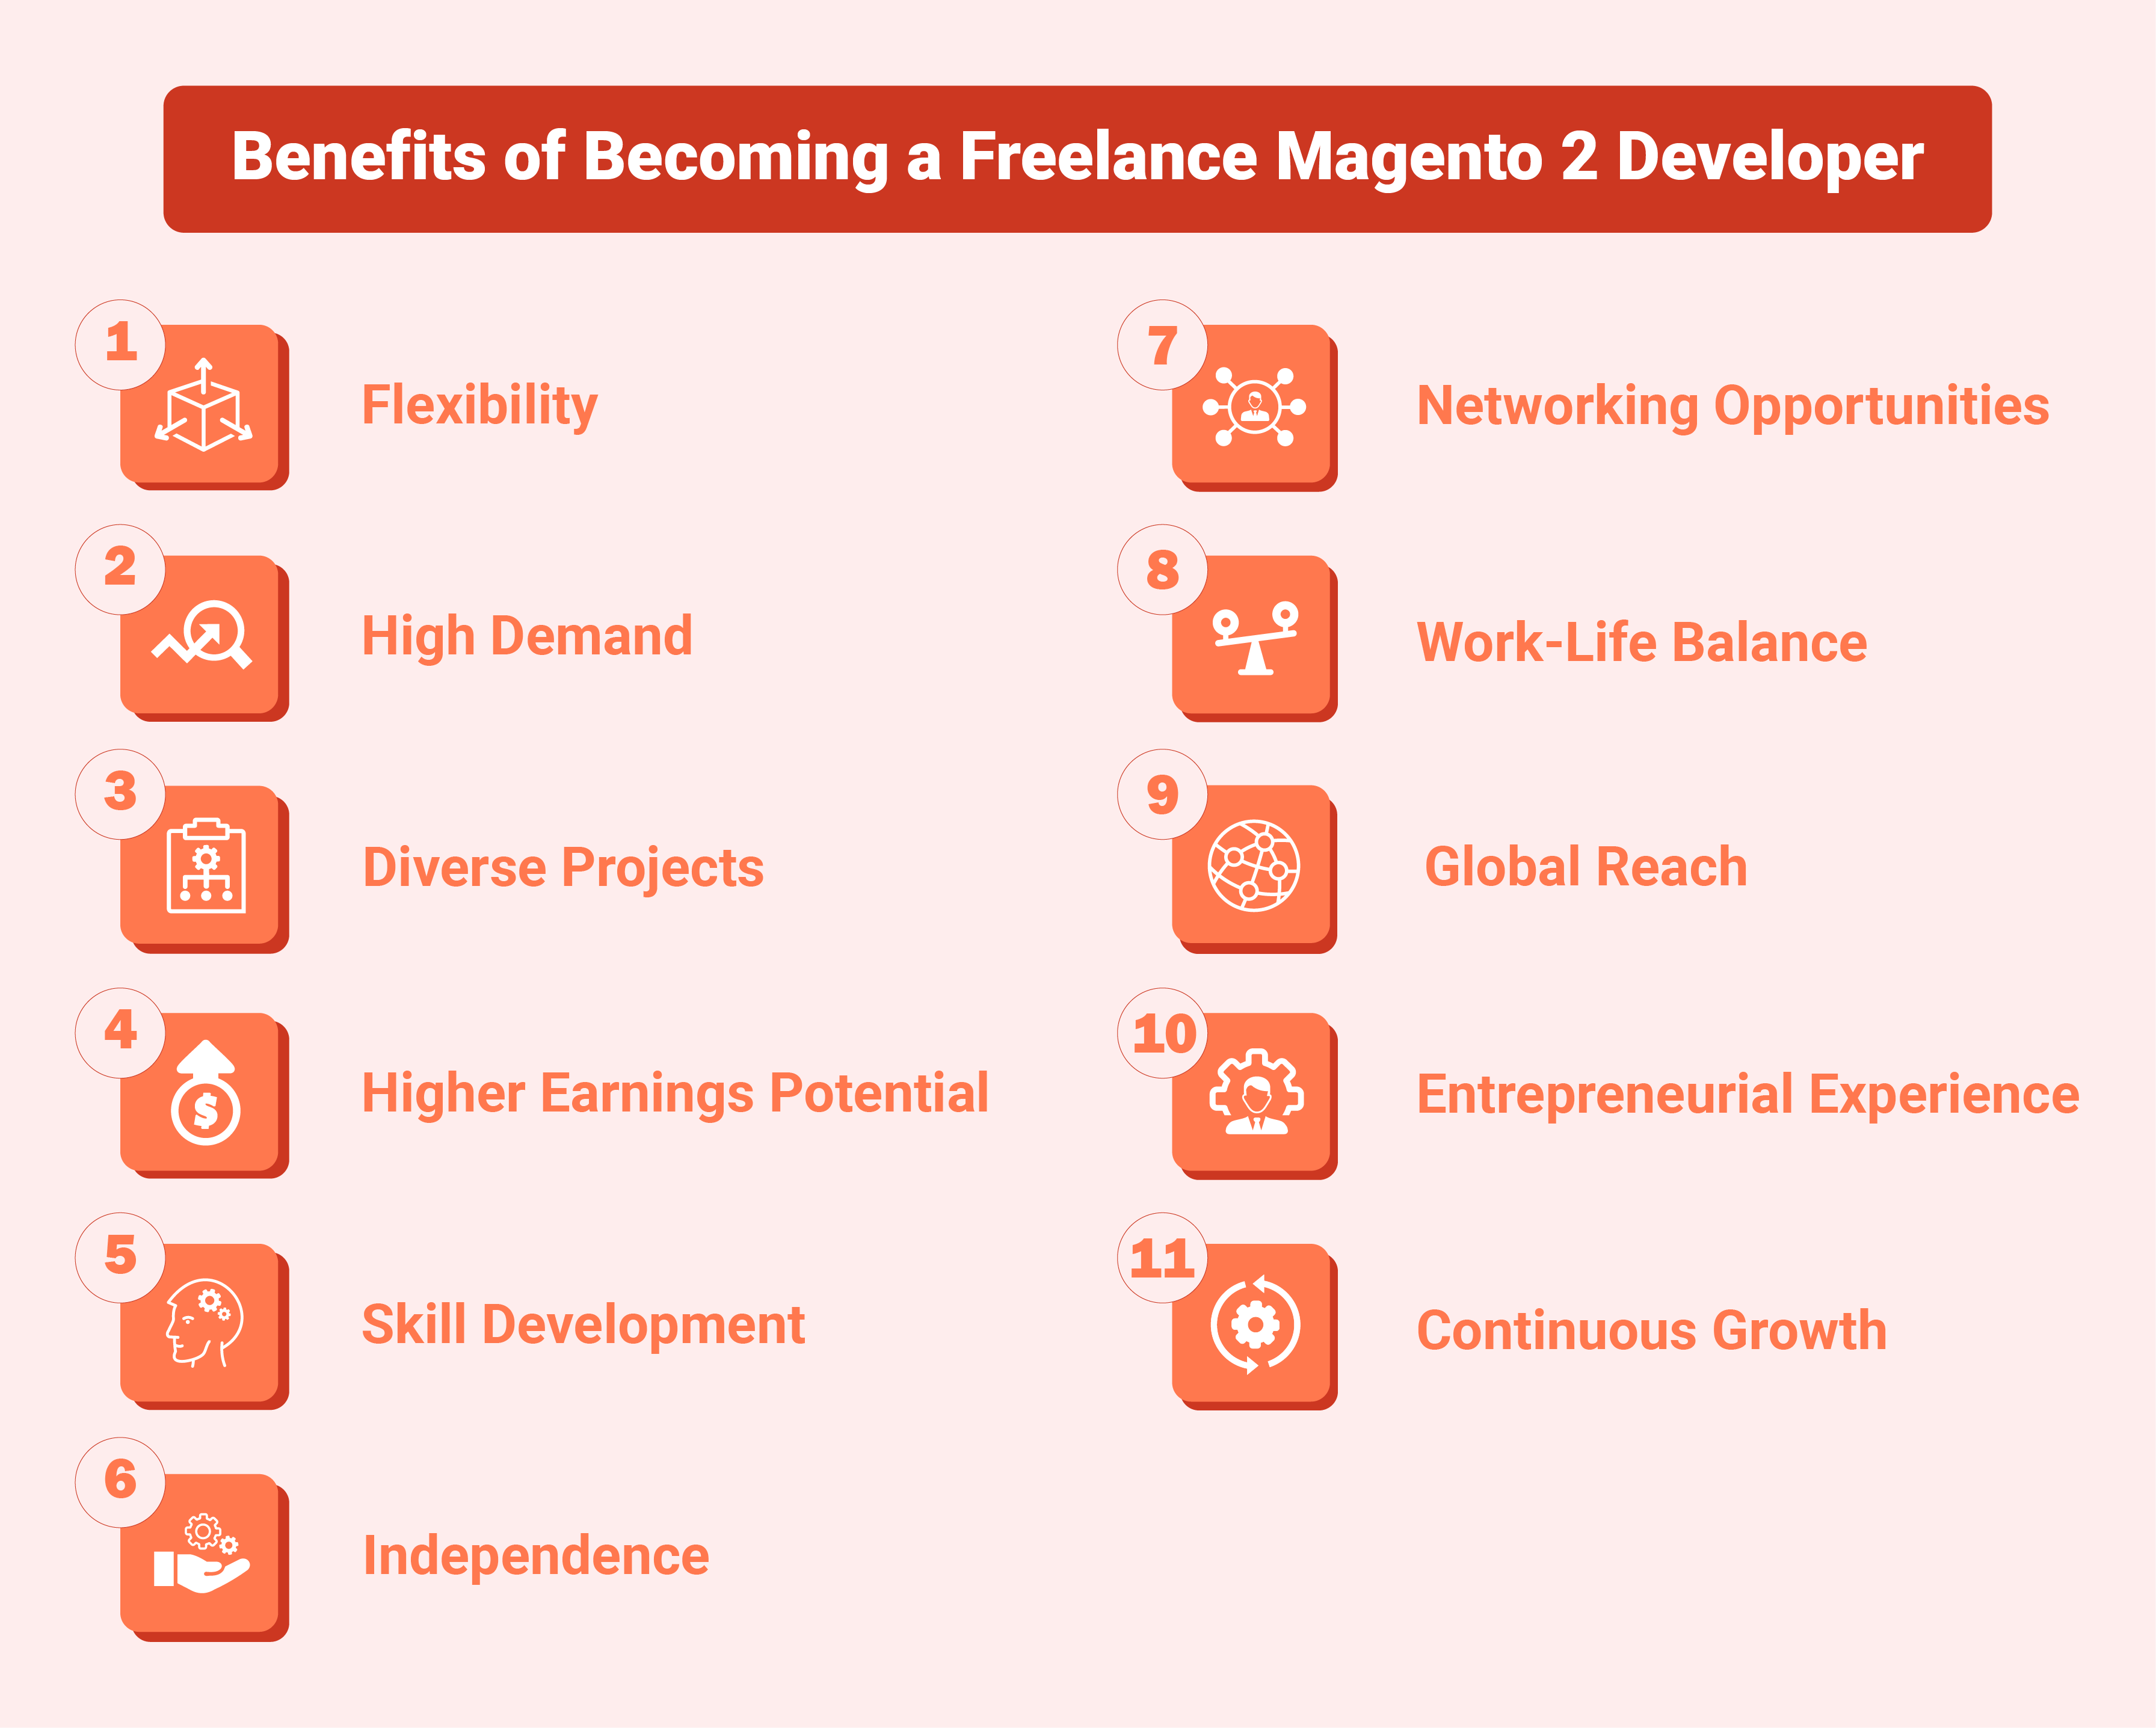 Benefits of Becoming a Freelance Magento 2 Developer